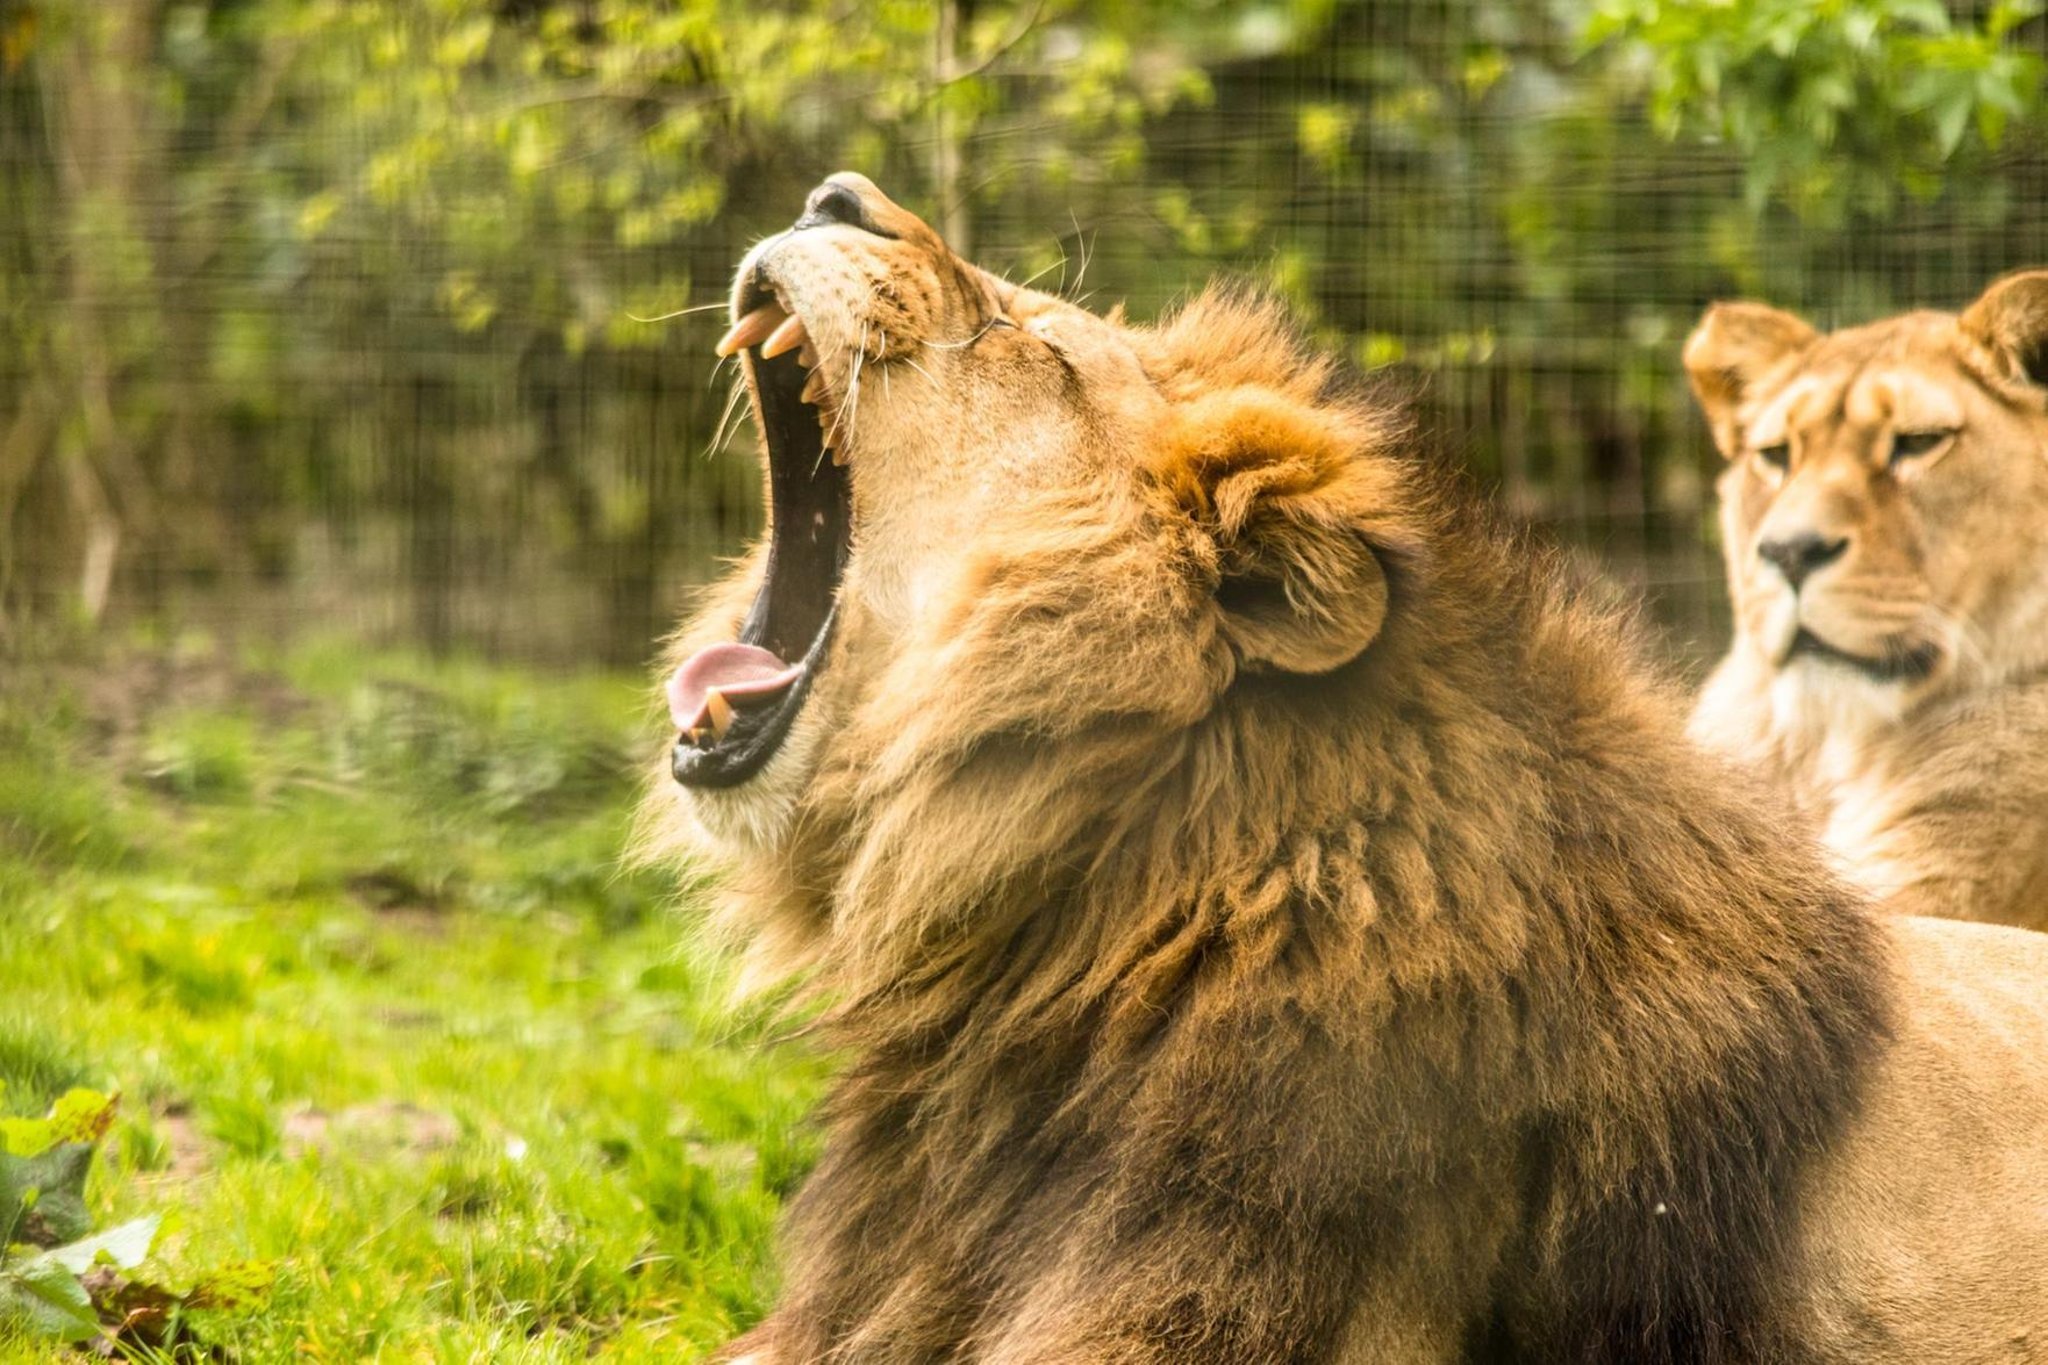 Belfast Zoo welcomes record-breaking year